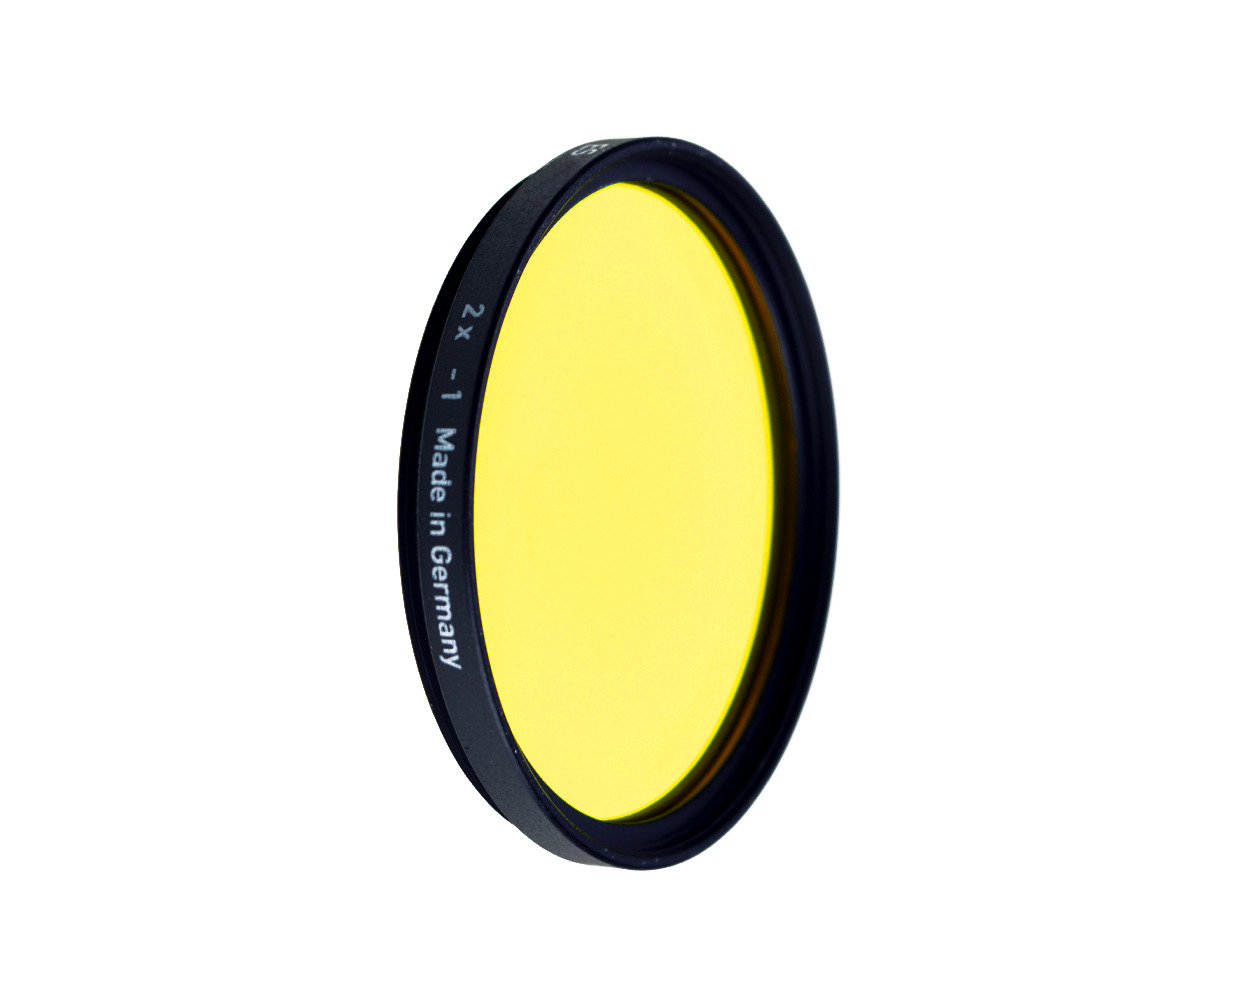 Heliopan black and white filter medium yellow 12 diameter: 67mm (ES67)  BlackWhite Filters Filters Cameras  Accessories macodirect EN